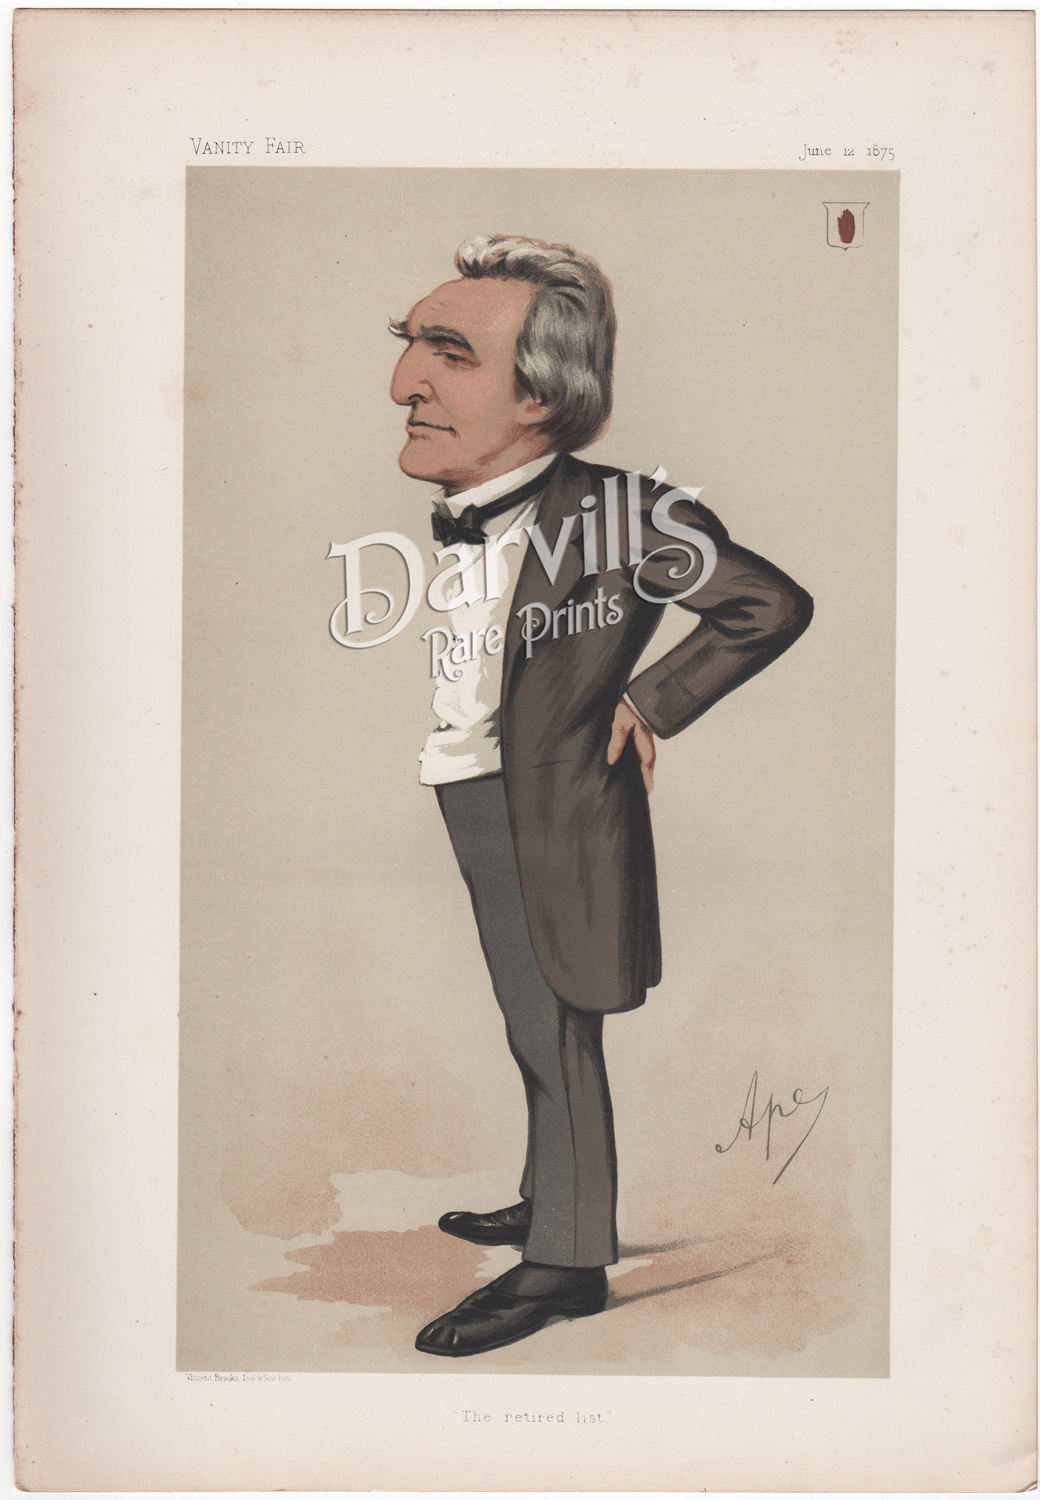 Sir John Charles Dalrymple Hay June 12 1875